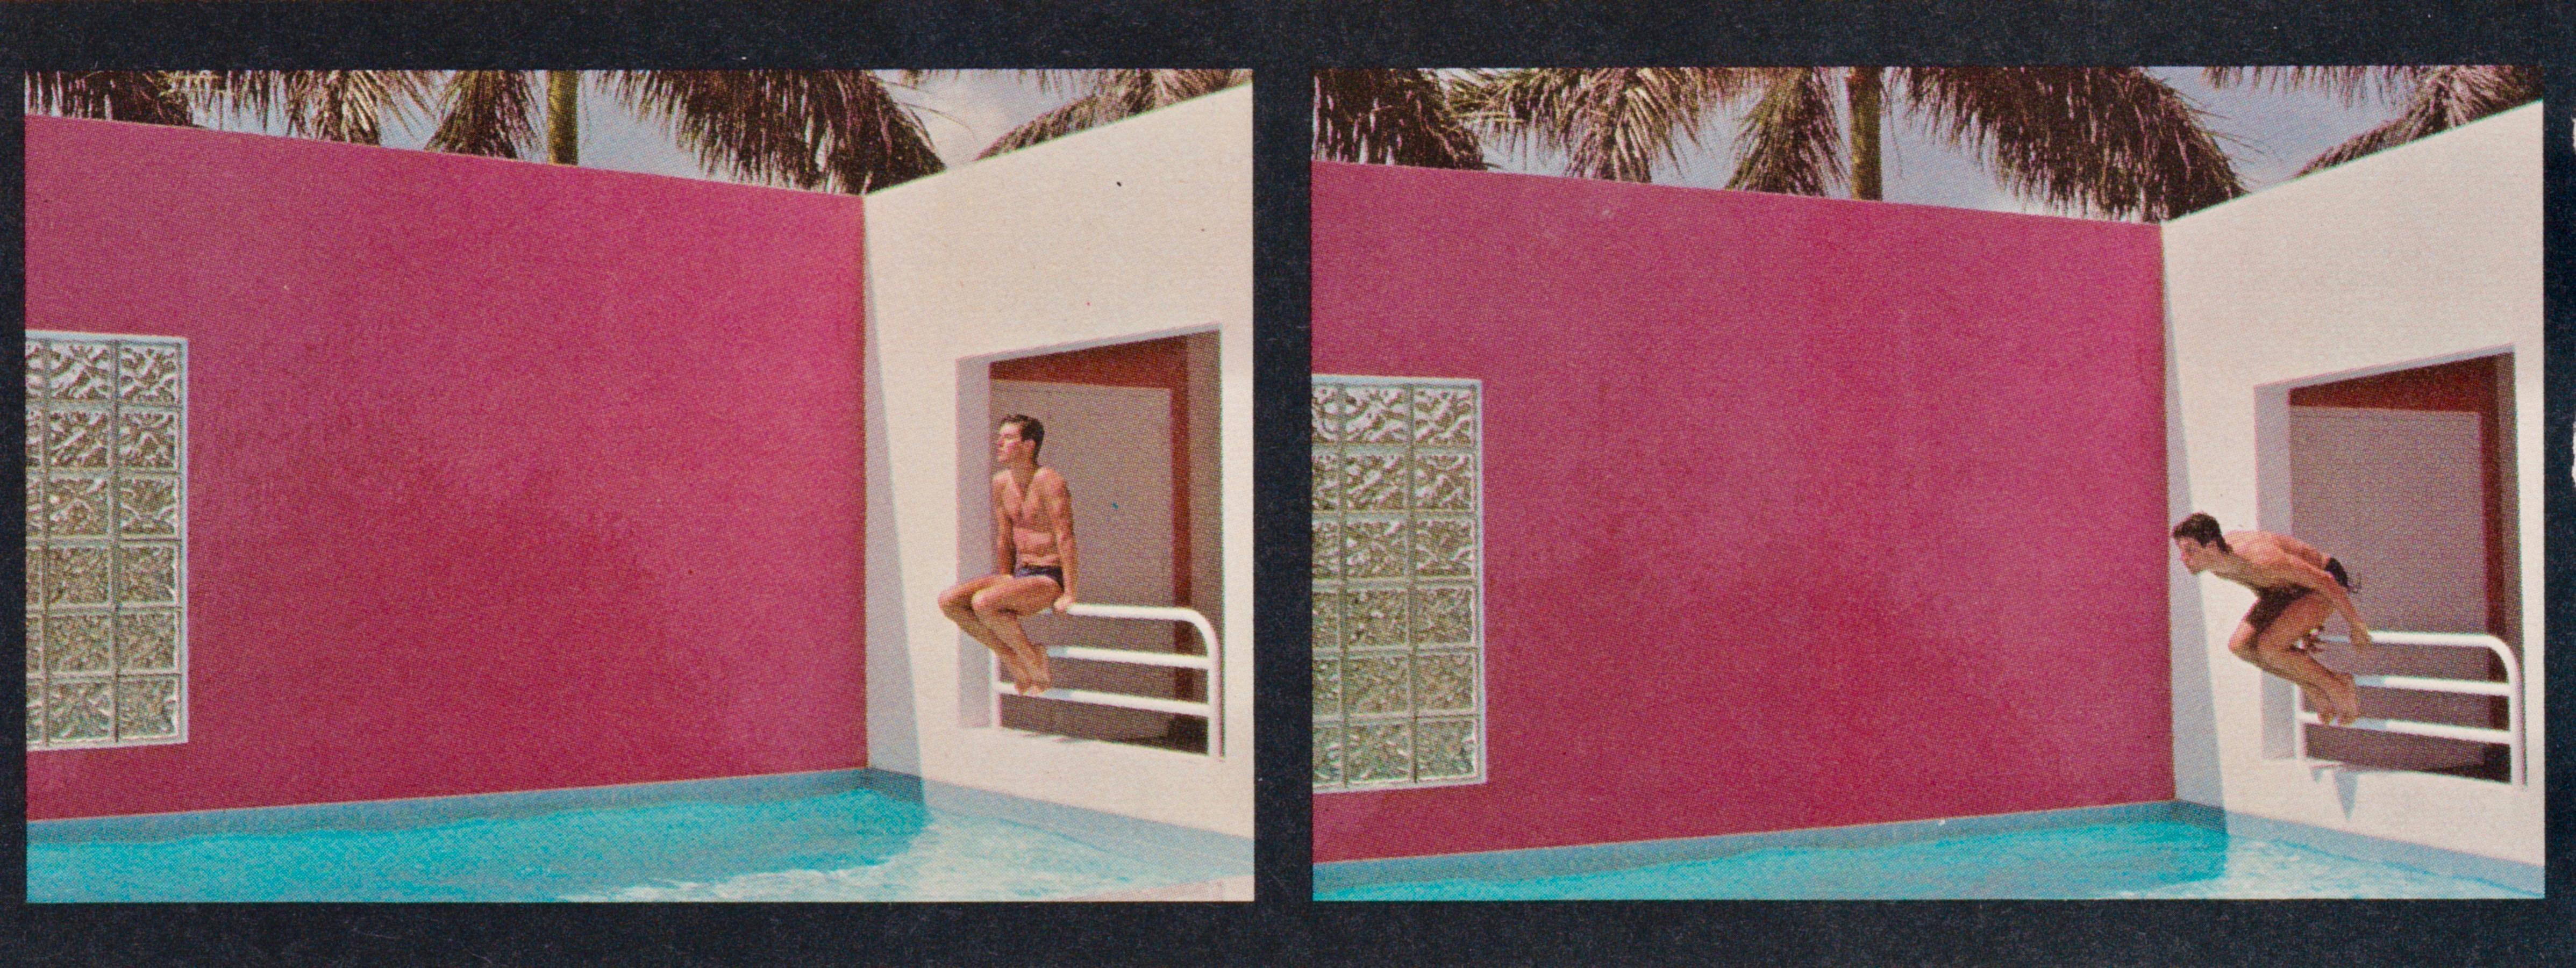 Wood Memphis Milano Madonna Dining Table Arquitectonica 1984 Iconic Postmodern Miami